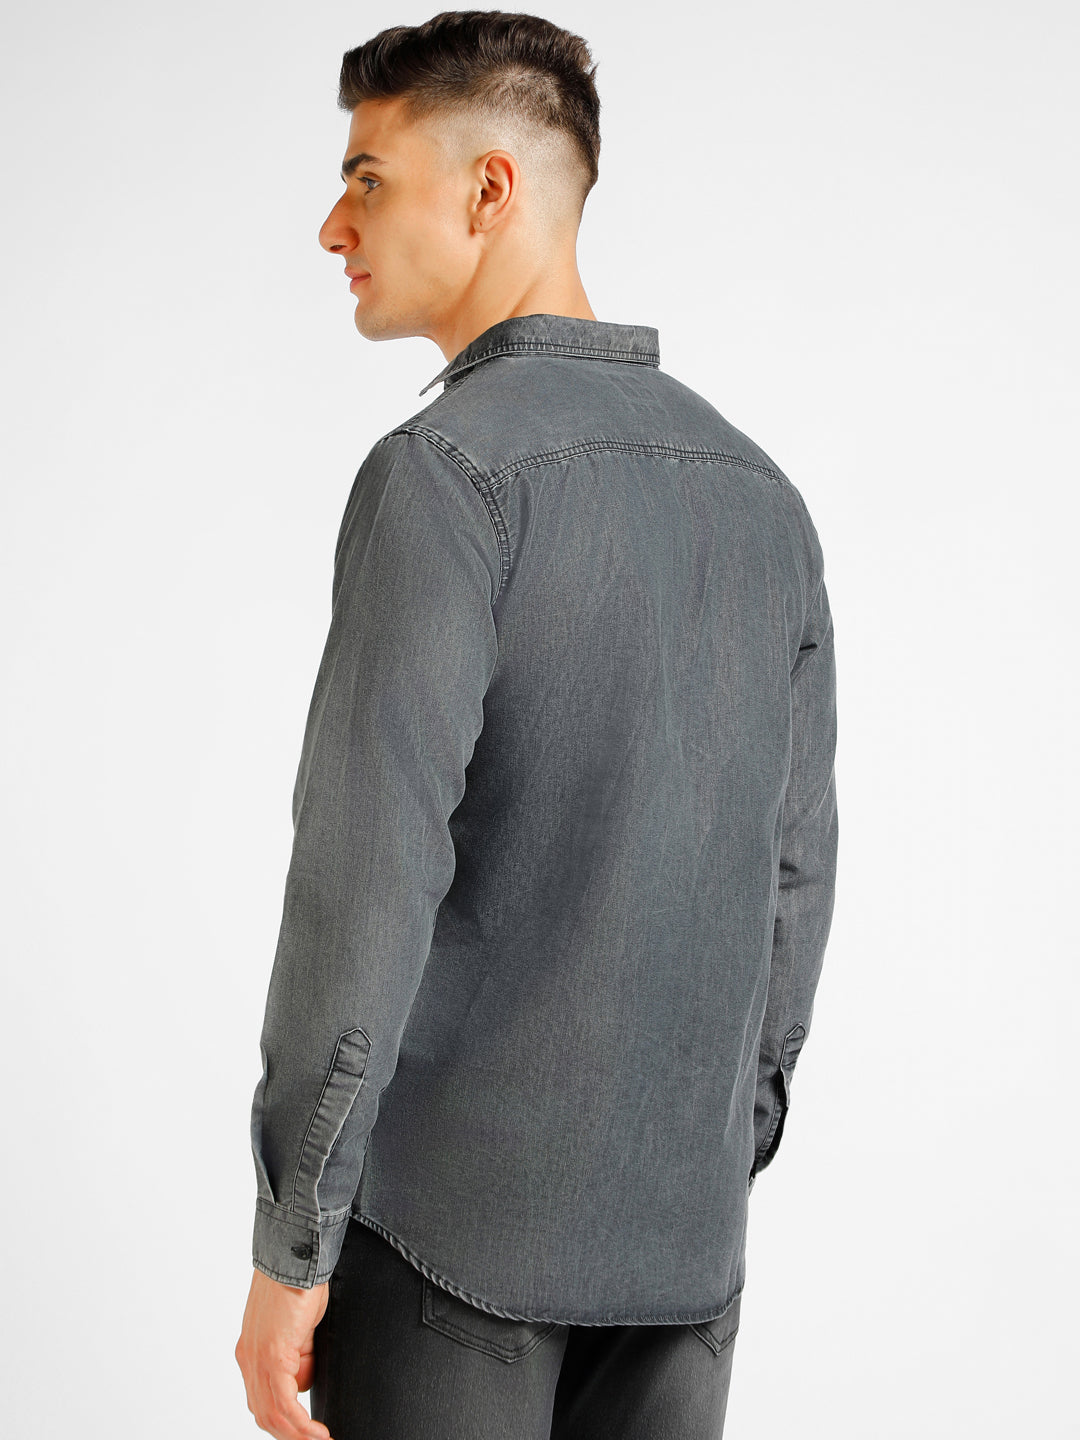 Urbano Fashion Men's Black Denim Full Sleeve Slim Fit Washed Casual Shirt